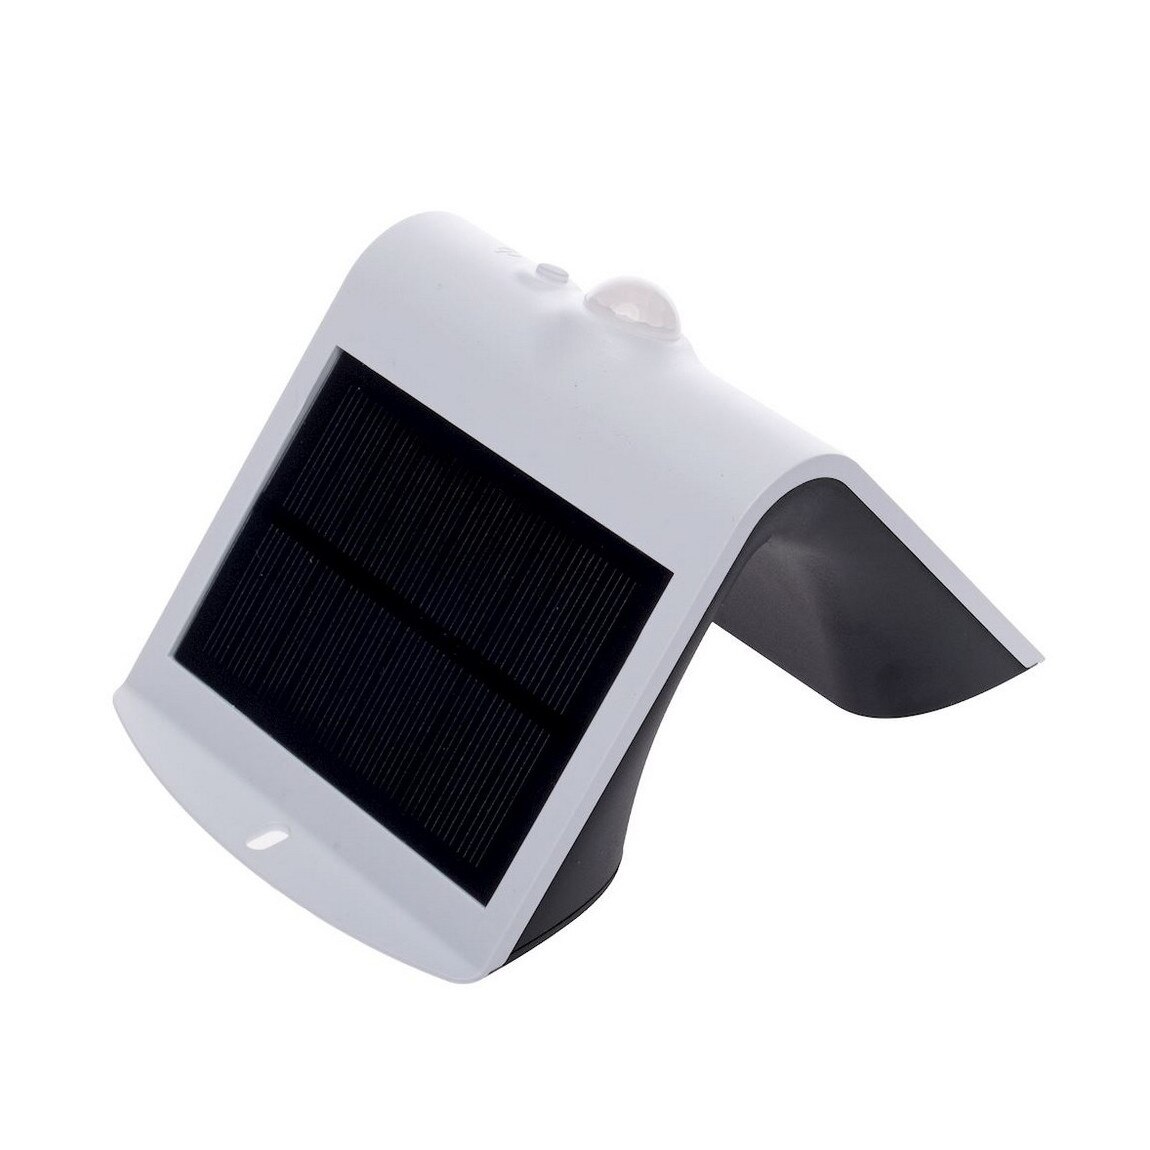  LED sensor solar light 5W, 300lm, 1200 mAh